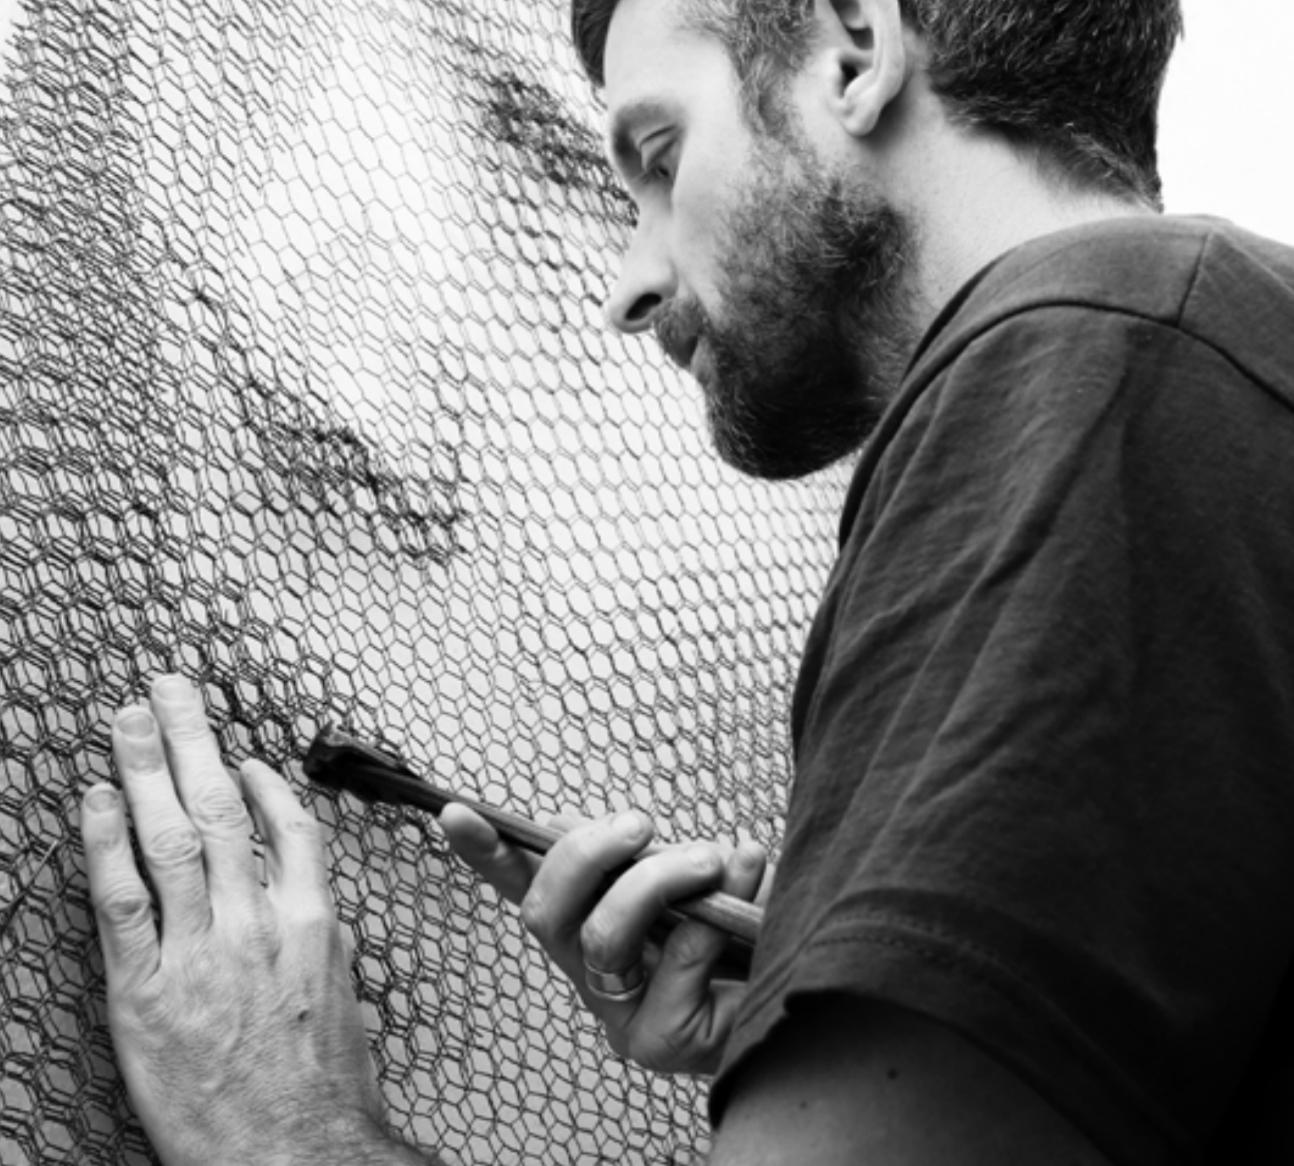 DIVINITA by Giorgio Tentolini. Original. Ten layers of black metal mesh on iron background. 45 x 45”. Framed in white gallery frame. 

Giorgio Tentolini was born in Casalmaggiore, Italy in 1978. He studied Graphic Arts at the Art Institute Toschi in